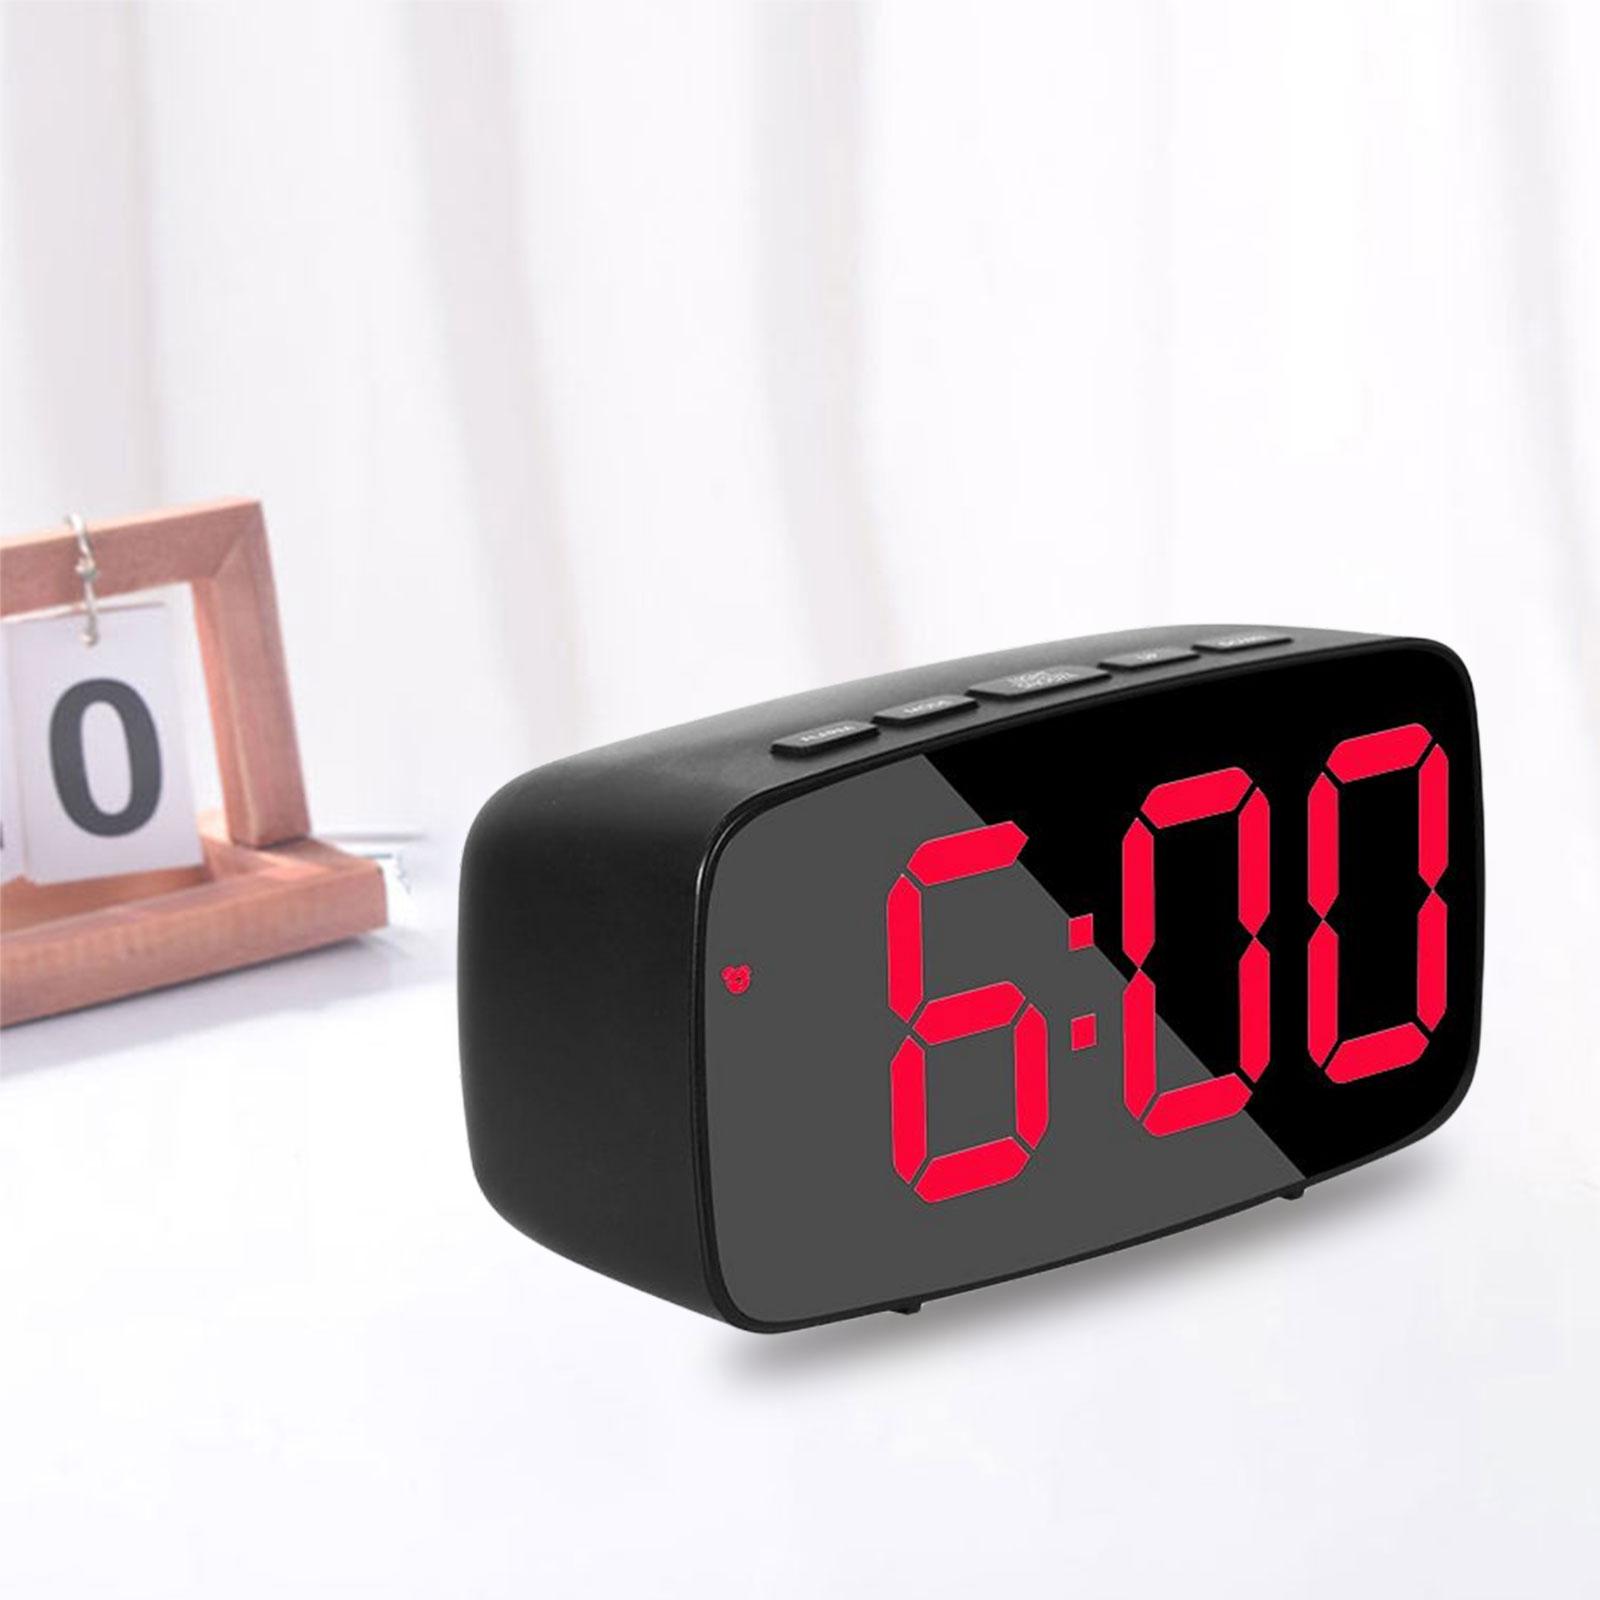 Digital LED Alarm Clock Bedroom Mirror Surface Snooze Bedside Red Light